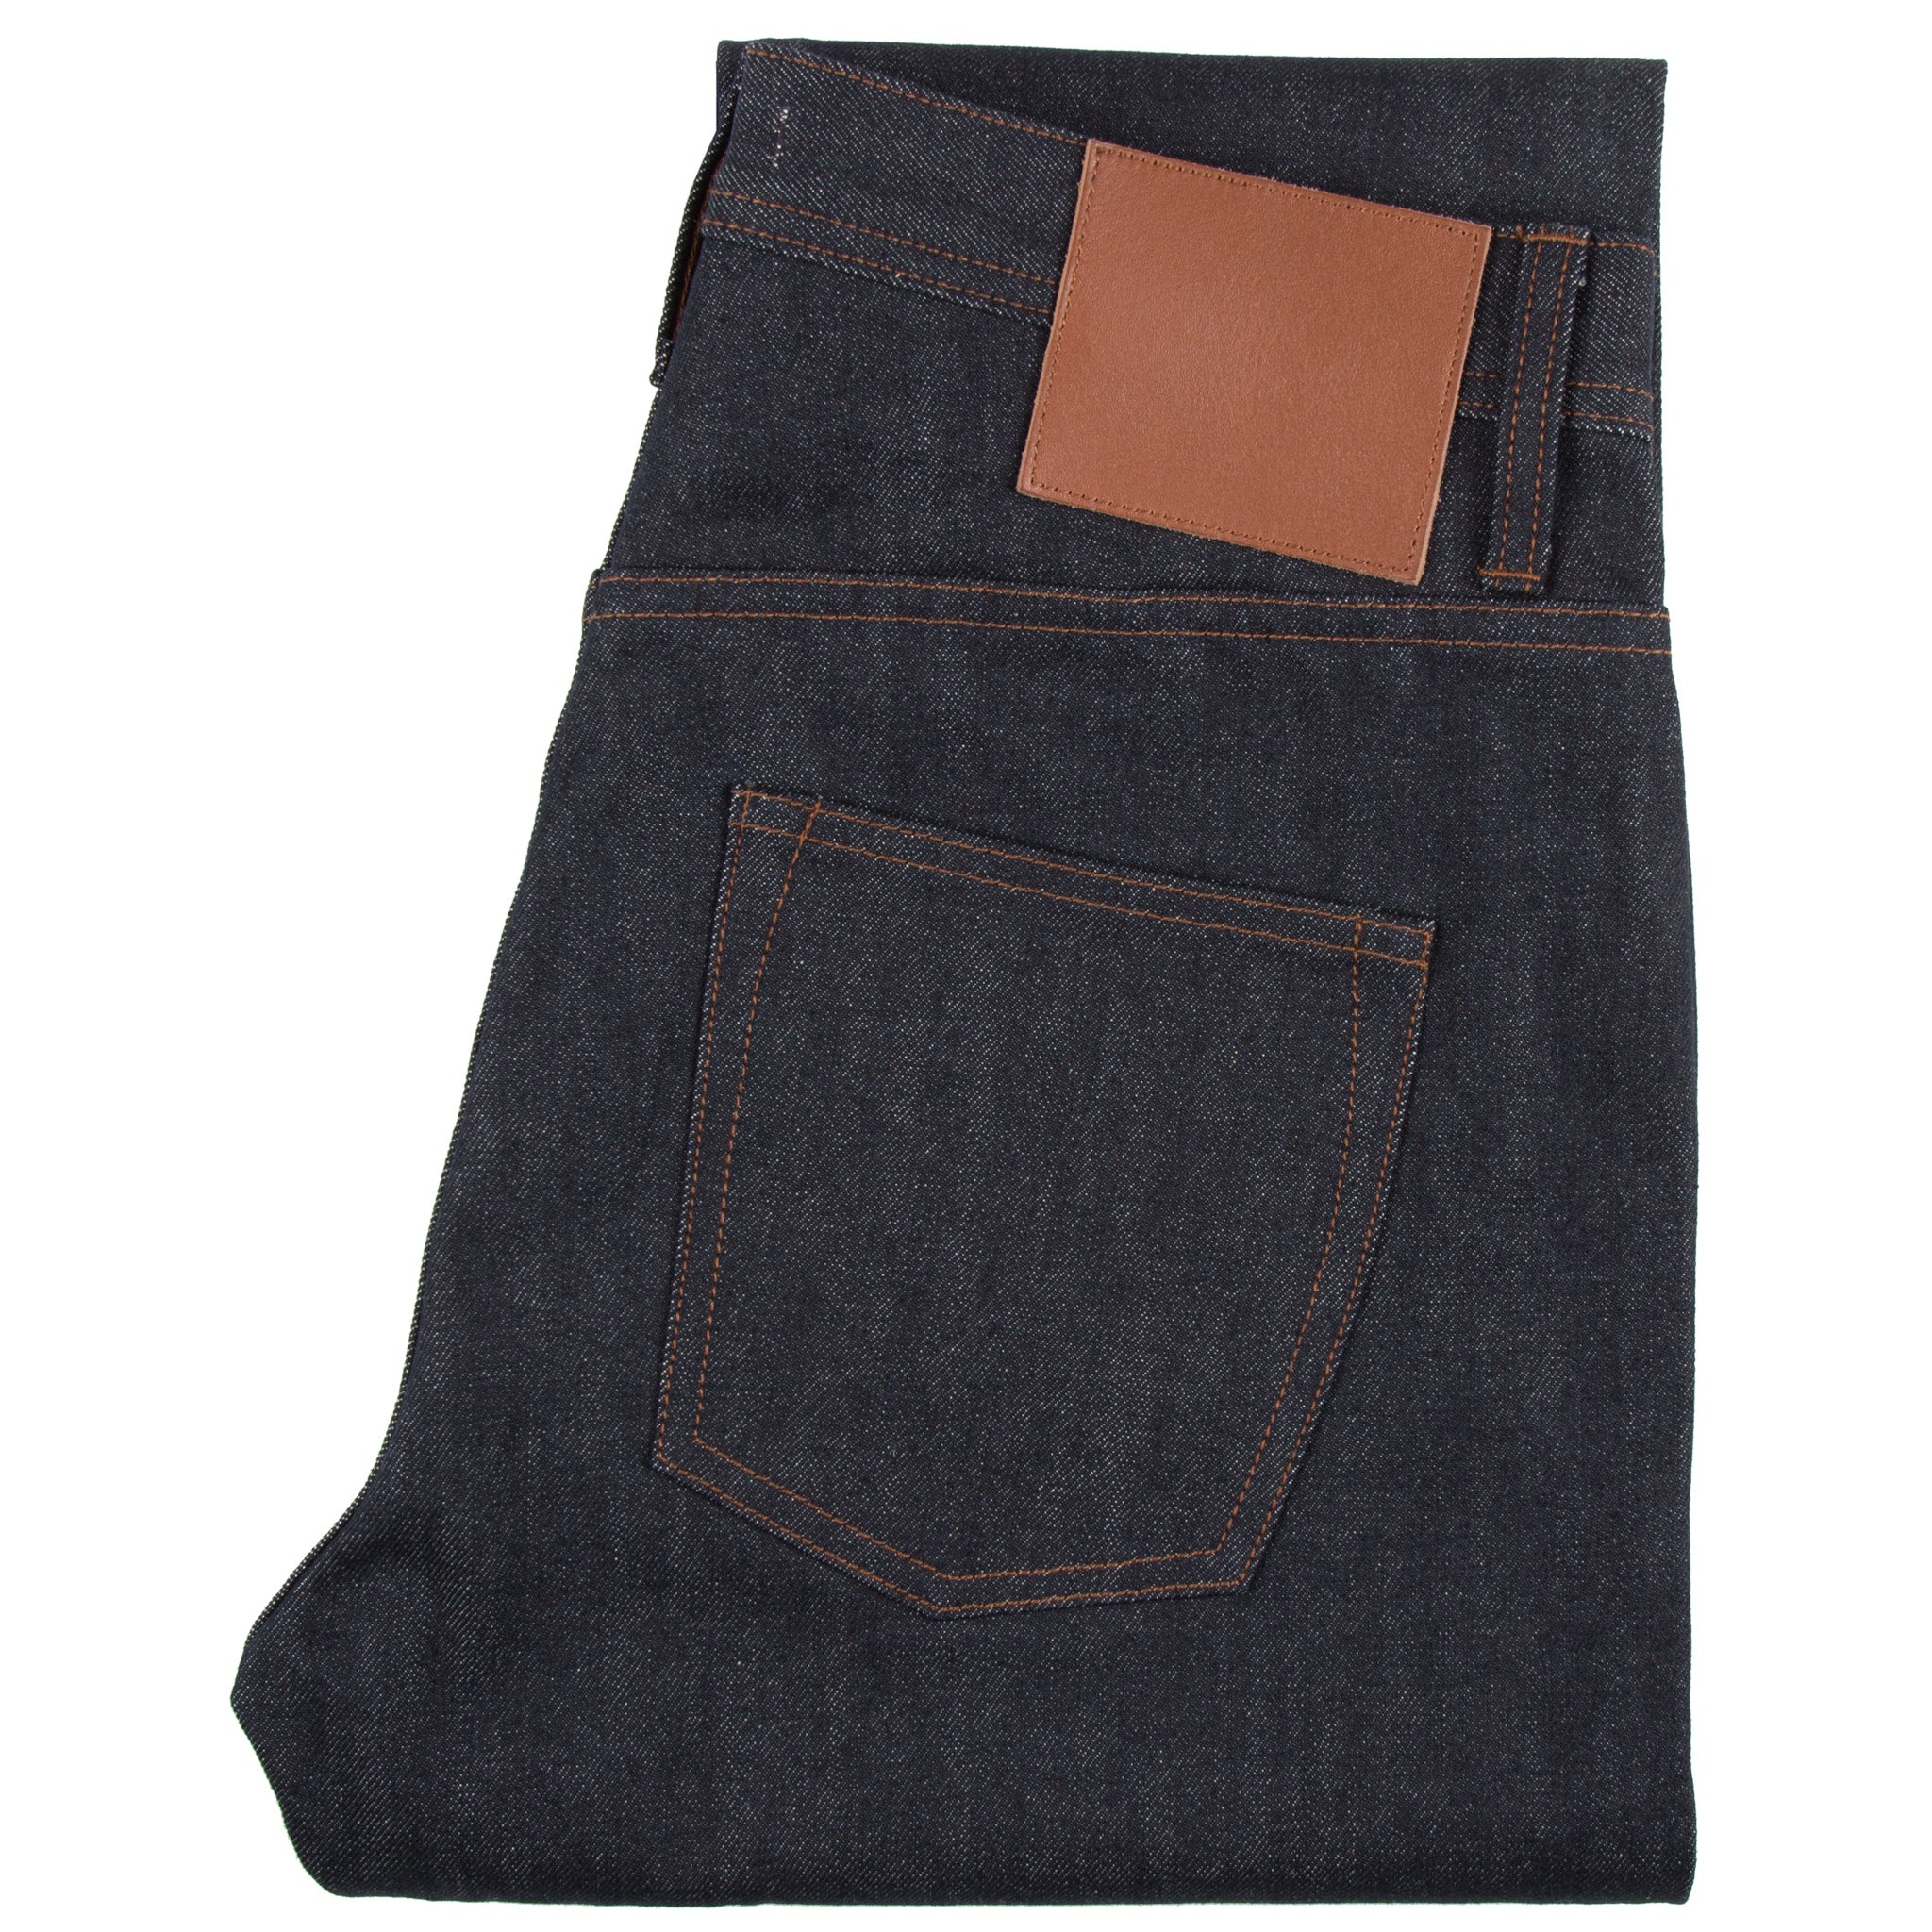 The Unbranded Brand Raw Denim Jeans - Tapered 14.5oz Indigo ...